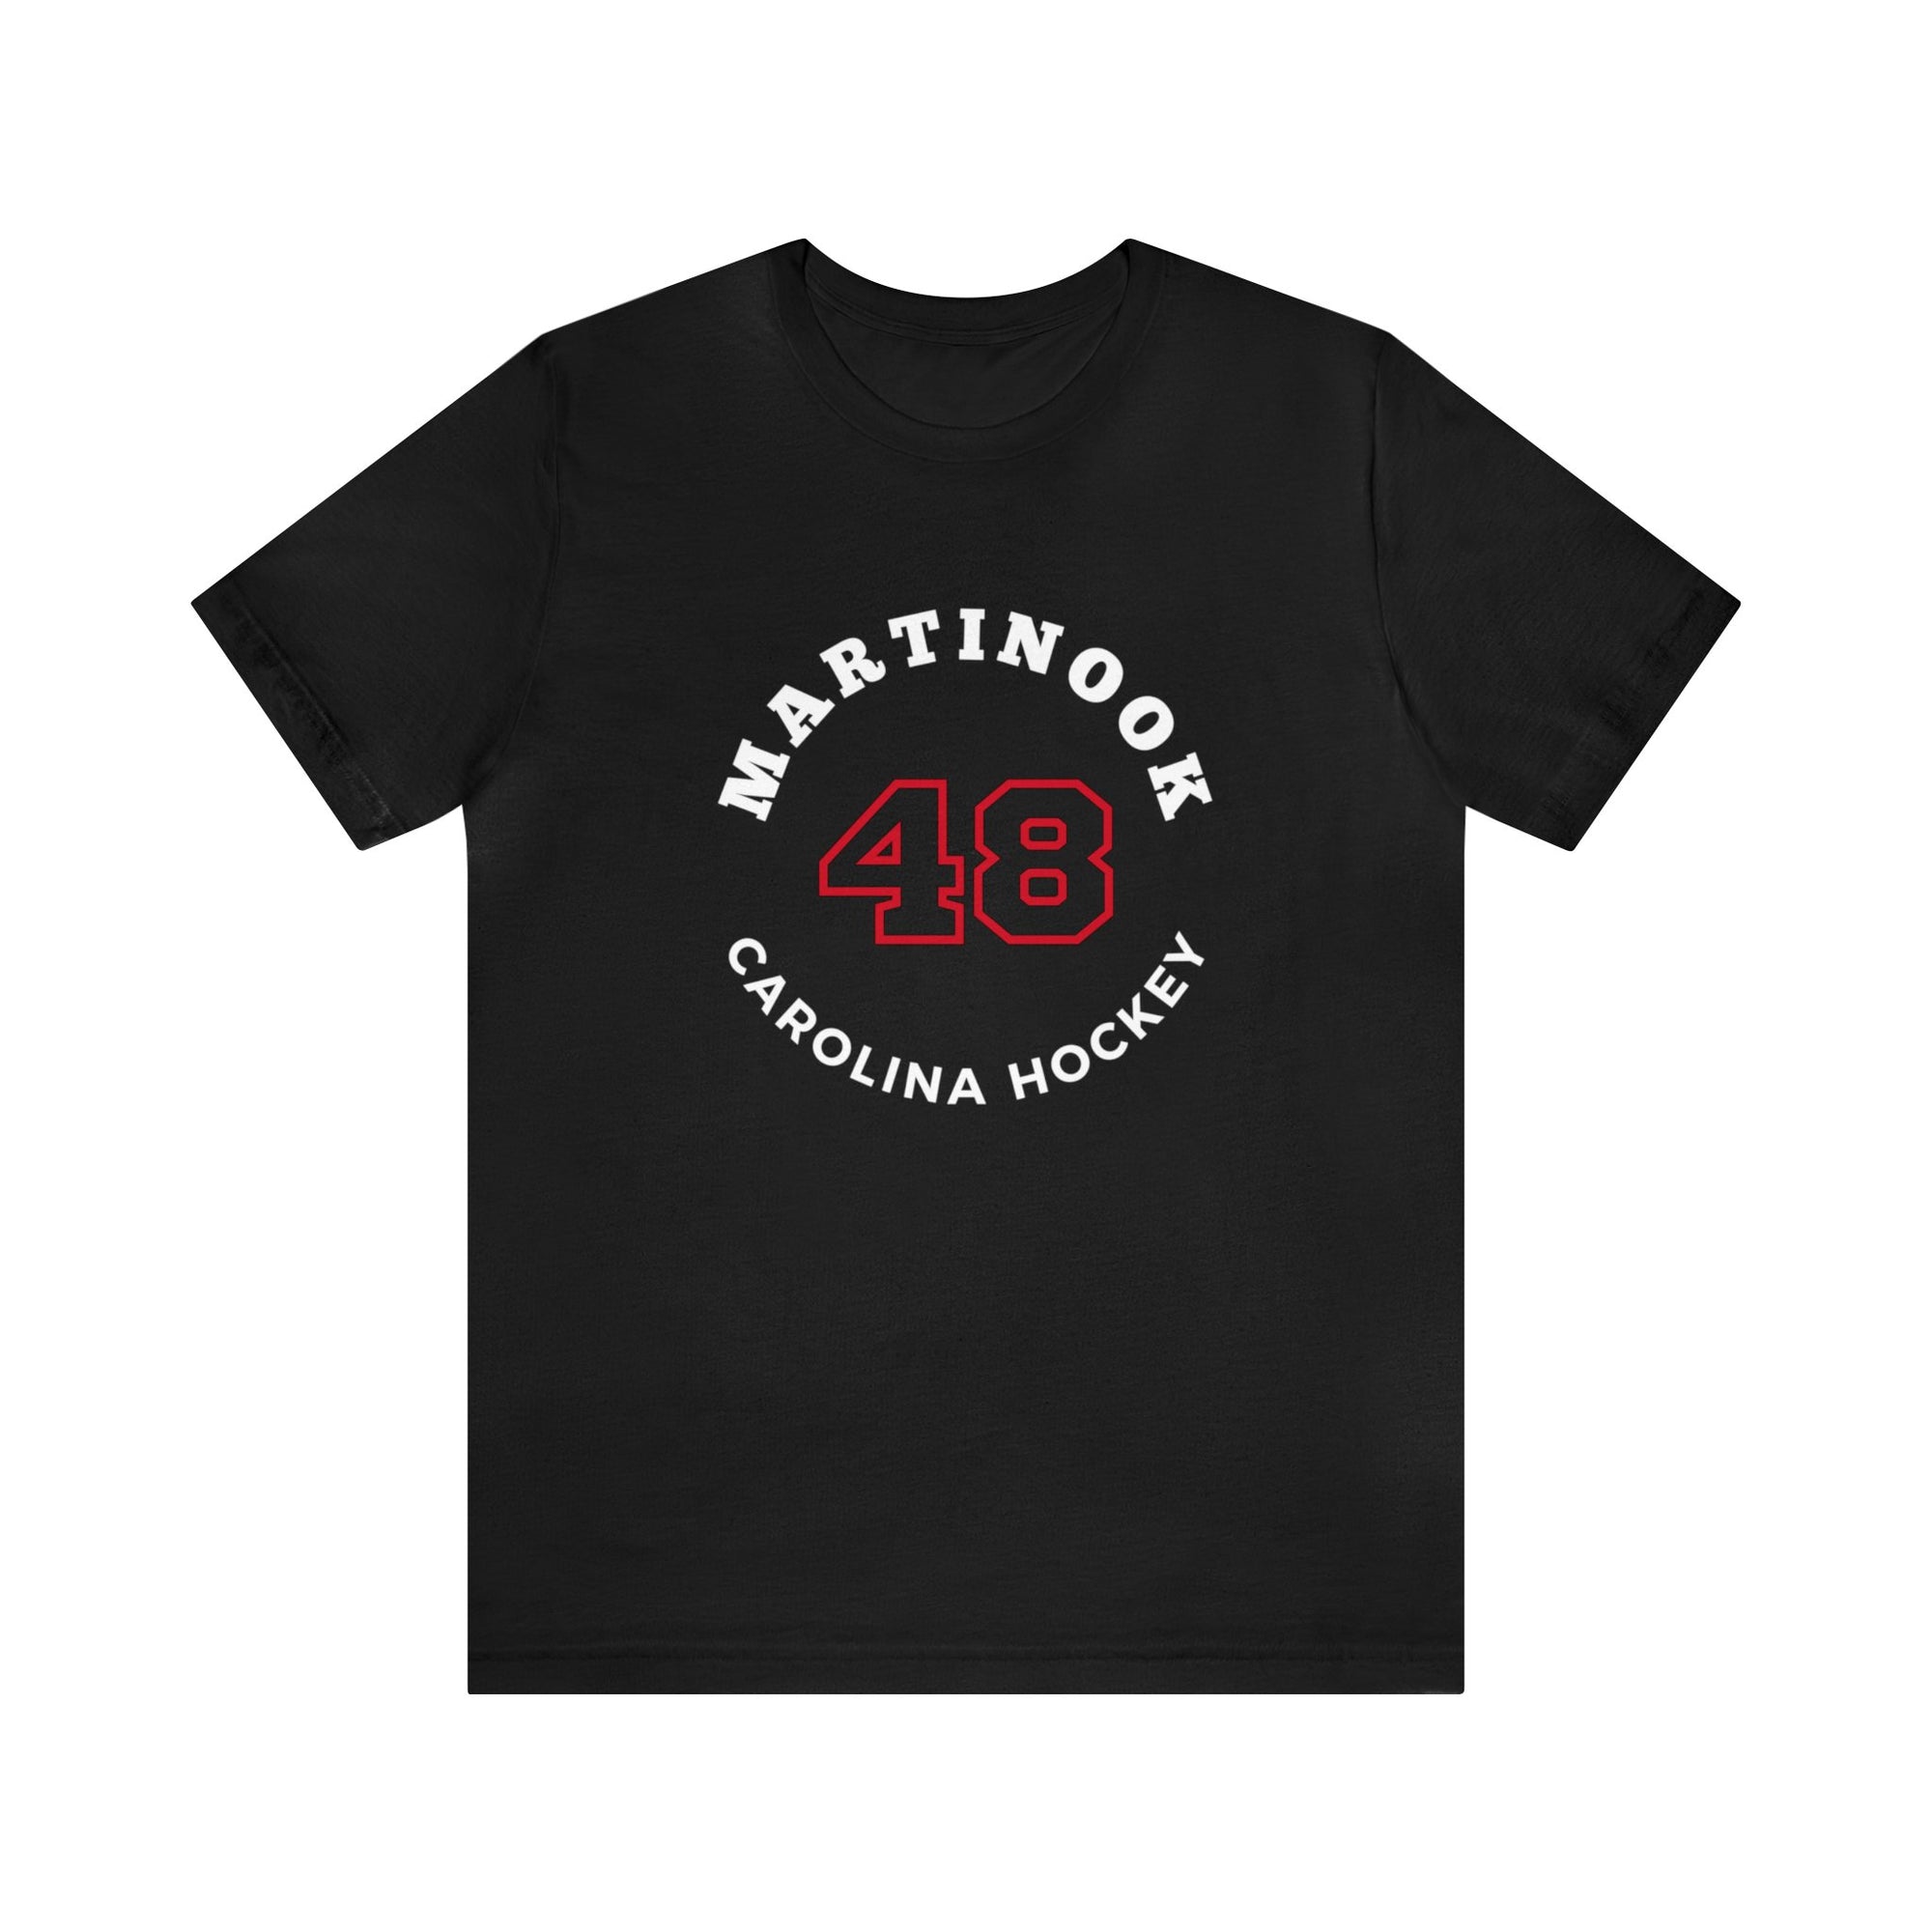 Martinook 48 Carolina Hockey Number Arch Design Unisex T-Shirt